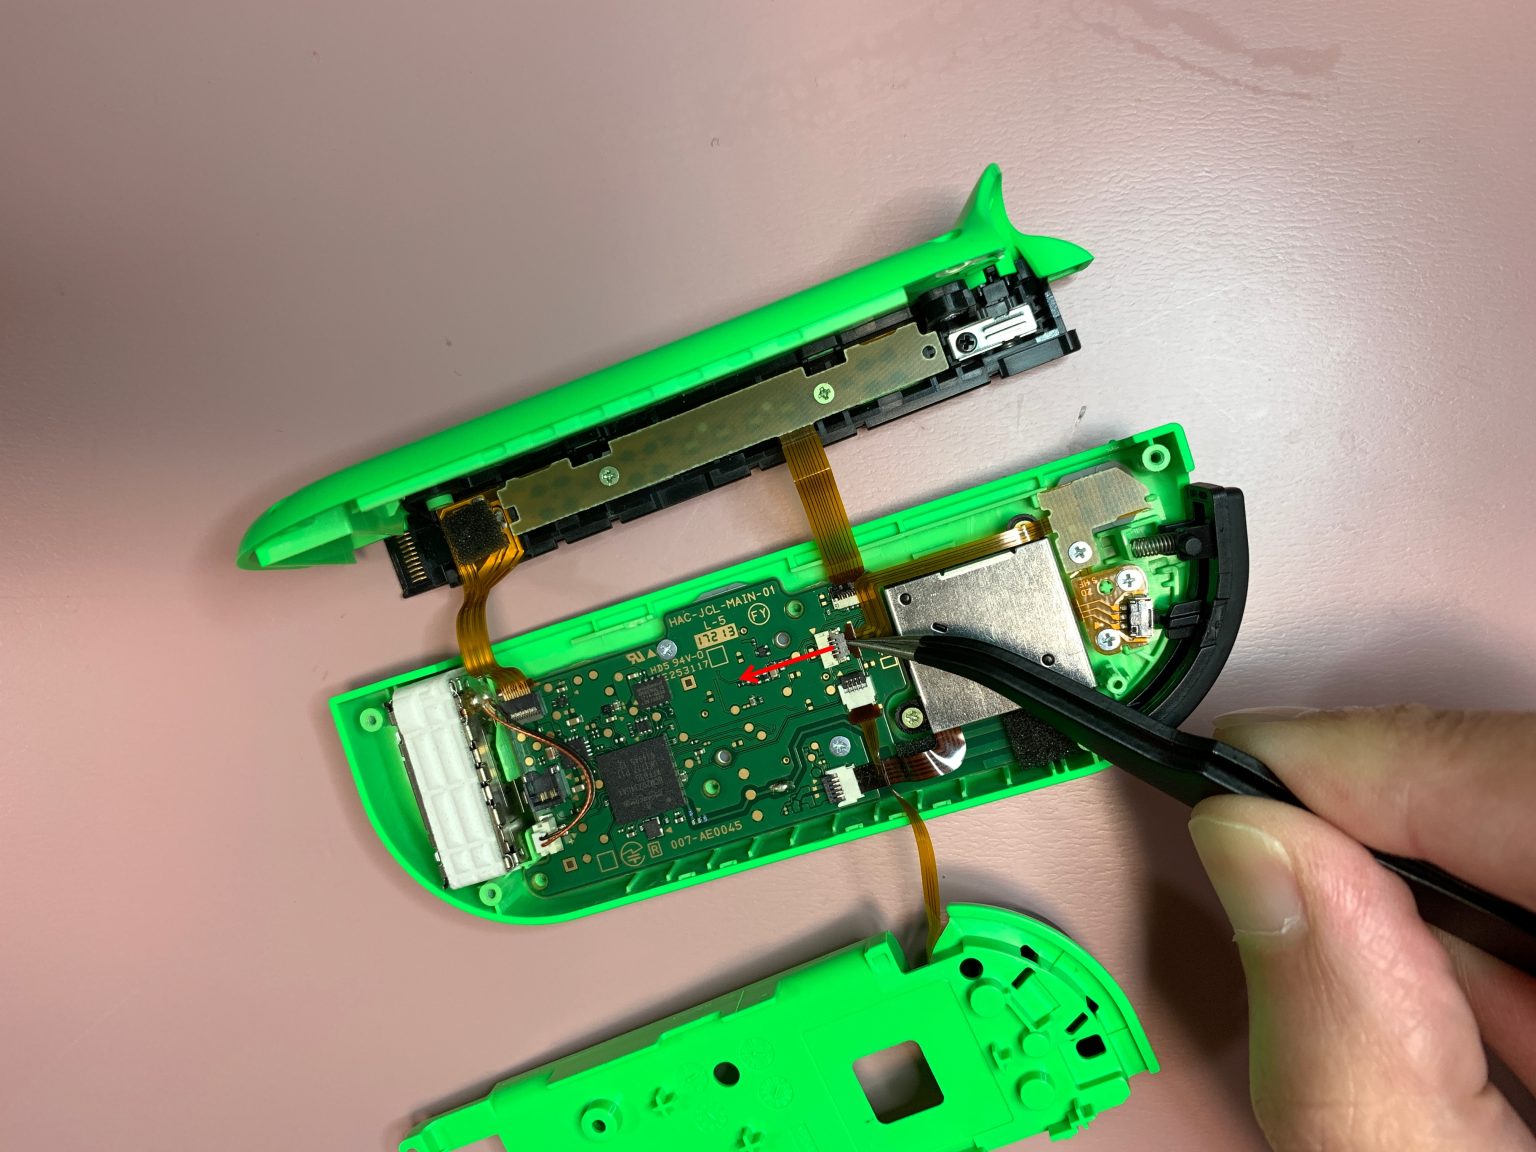 Nintendo Switchのジョイコン（左）が勝手に動く、反応が悪い、壊れた！これをDIY（自力で）で修理する（パーツ交換）やり方